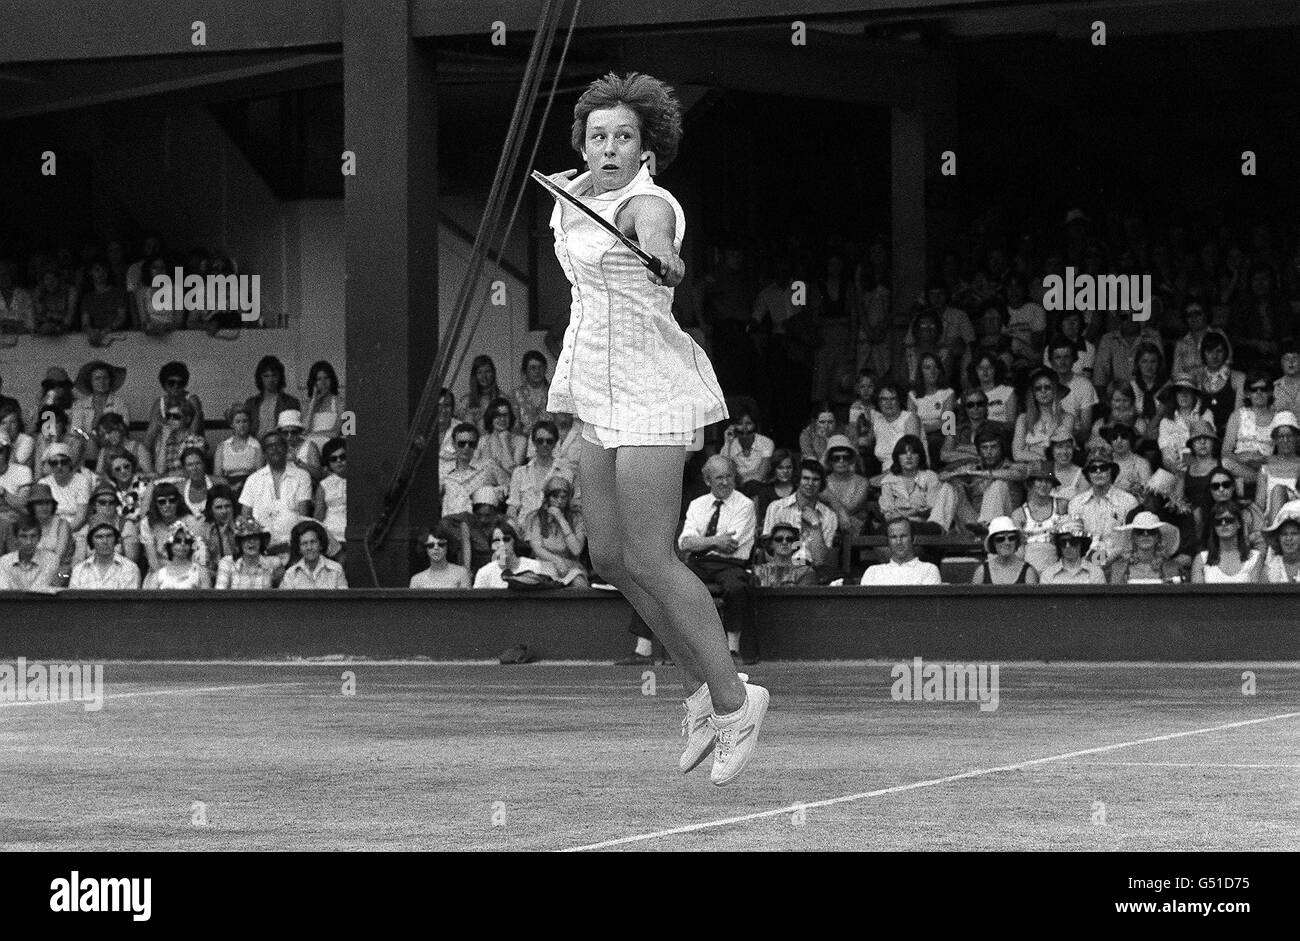 Czechoslovakia's Martina Navratilova in action against Britain's Sue Barker on Court One during Wimbledon. Navratilova defeated Barker 6-3, 3-6, 7-5, to reach the semi-finals. Stock Photo